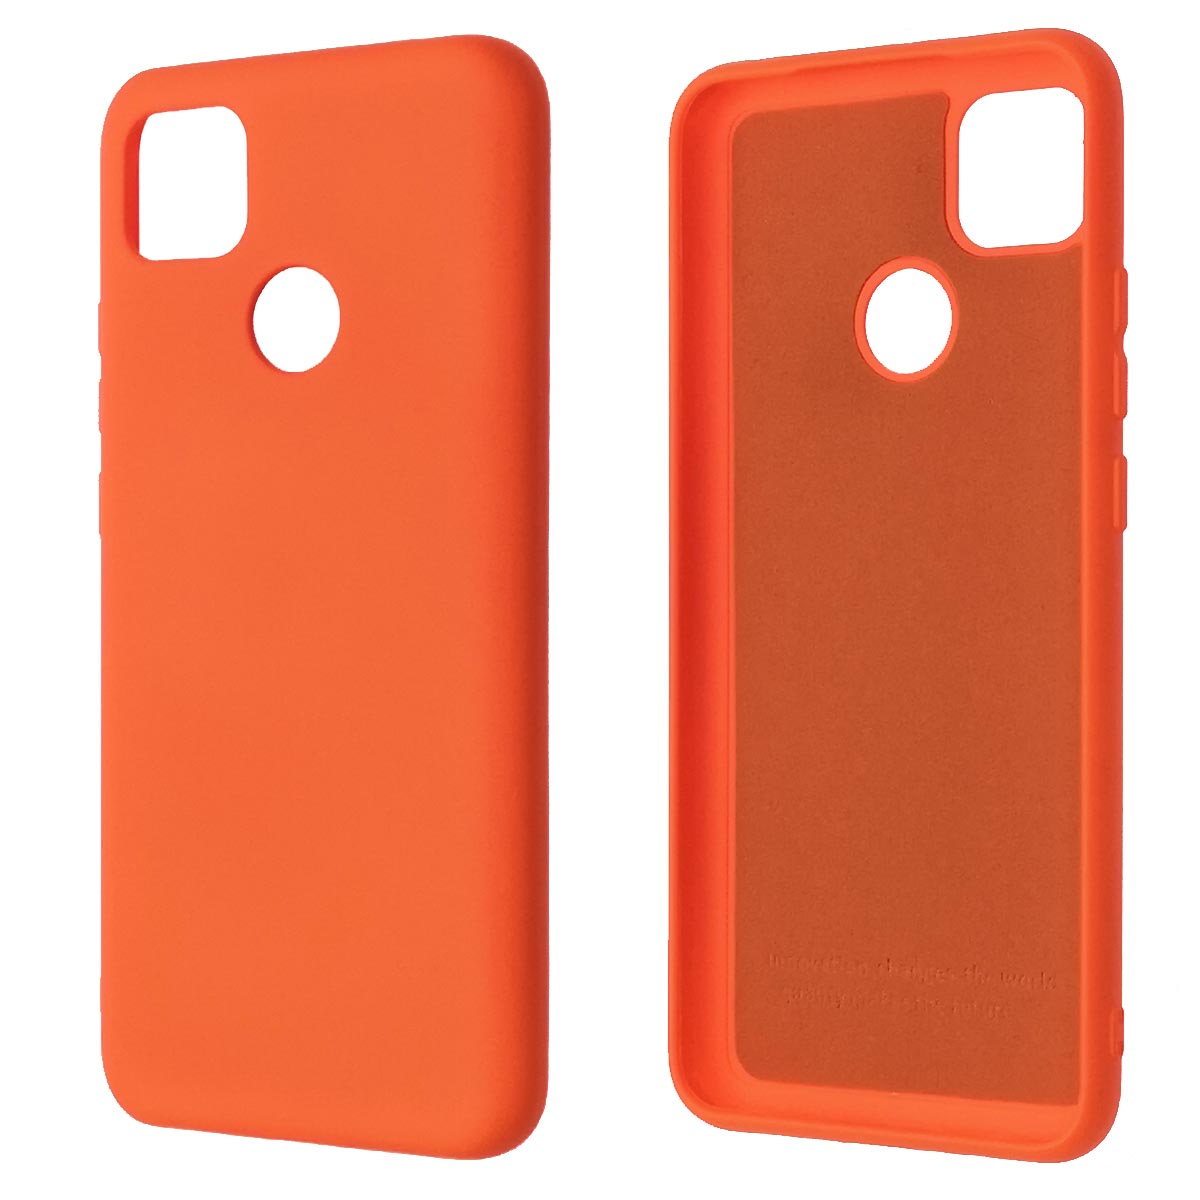 Чехол накладка Silicon Cover для XIAOMI Redmi 9C, Redmi 10A, силикон, бархат, цвет оранжевый